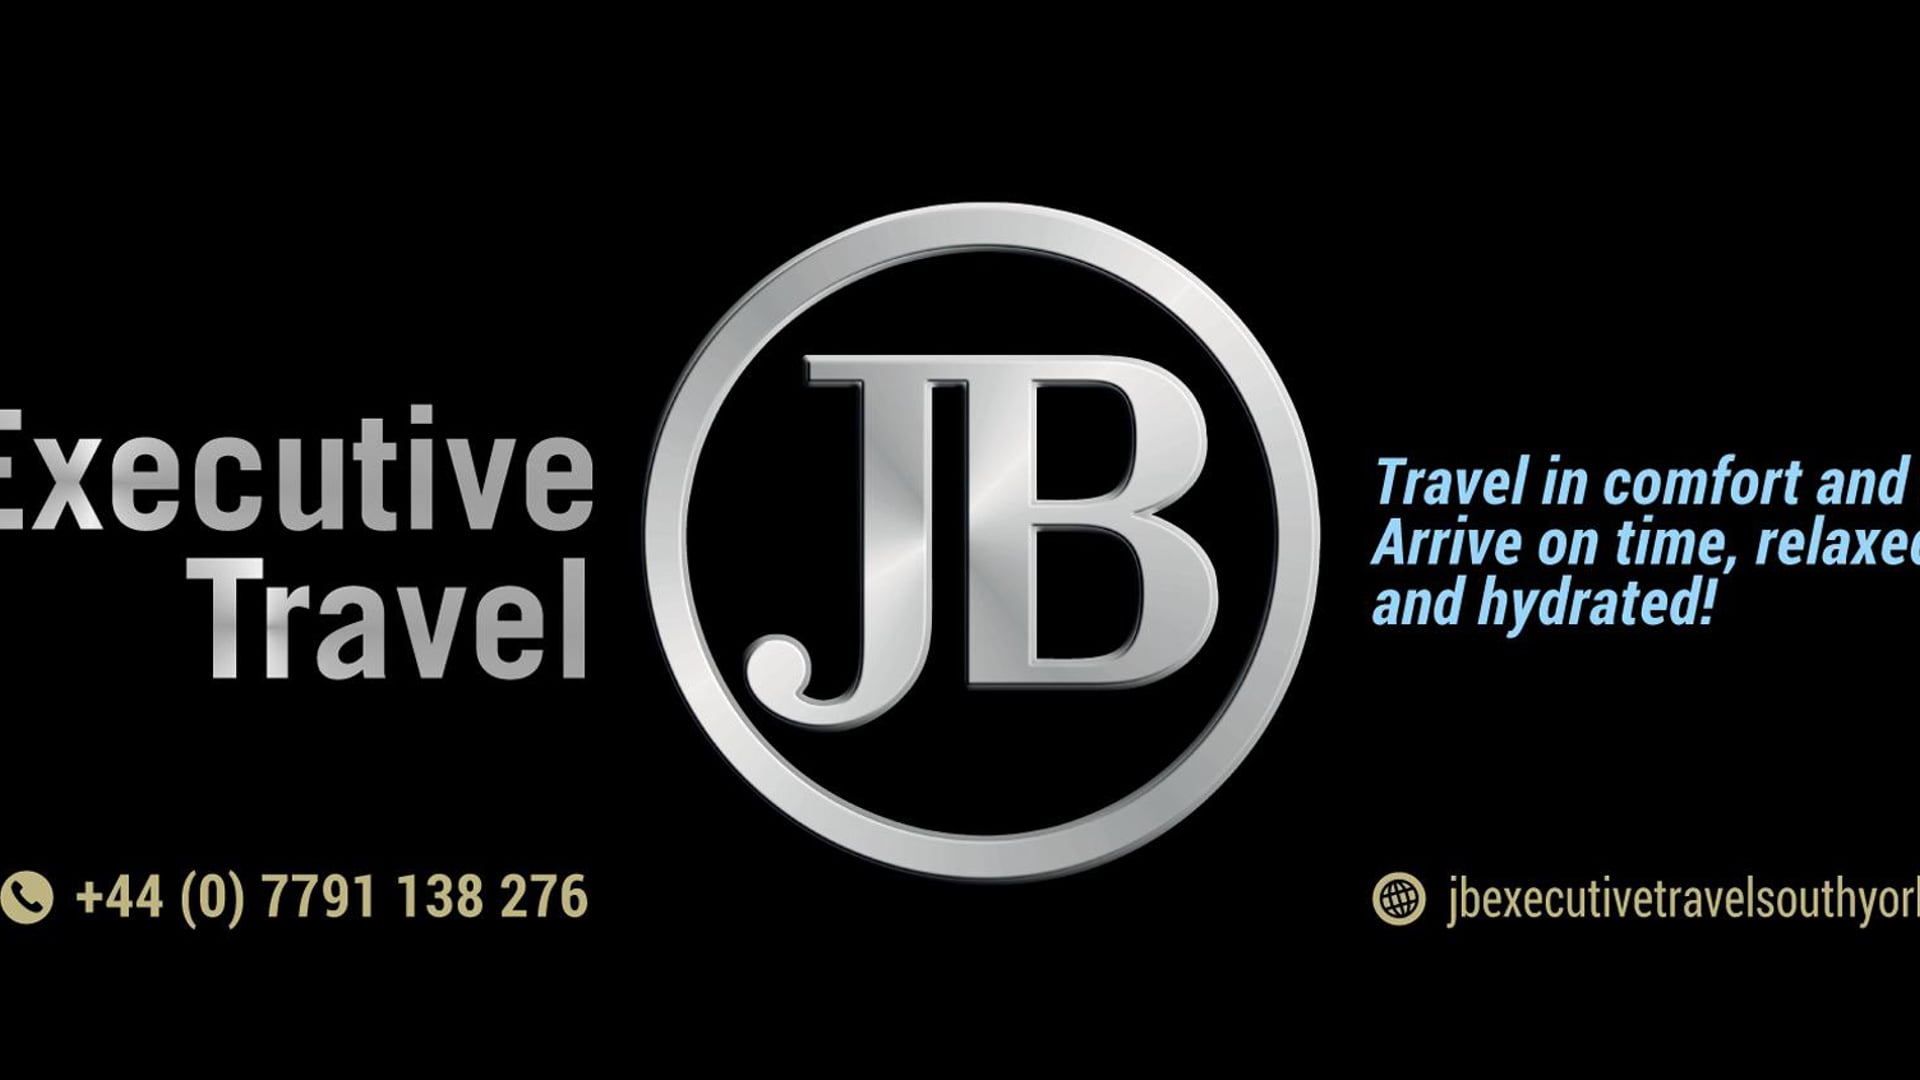 JB Executive Travel